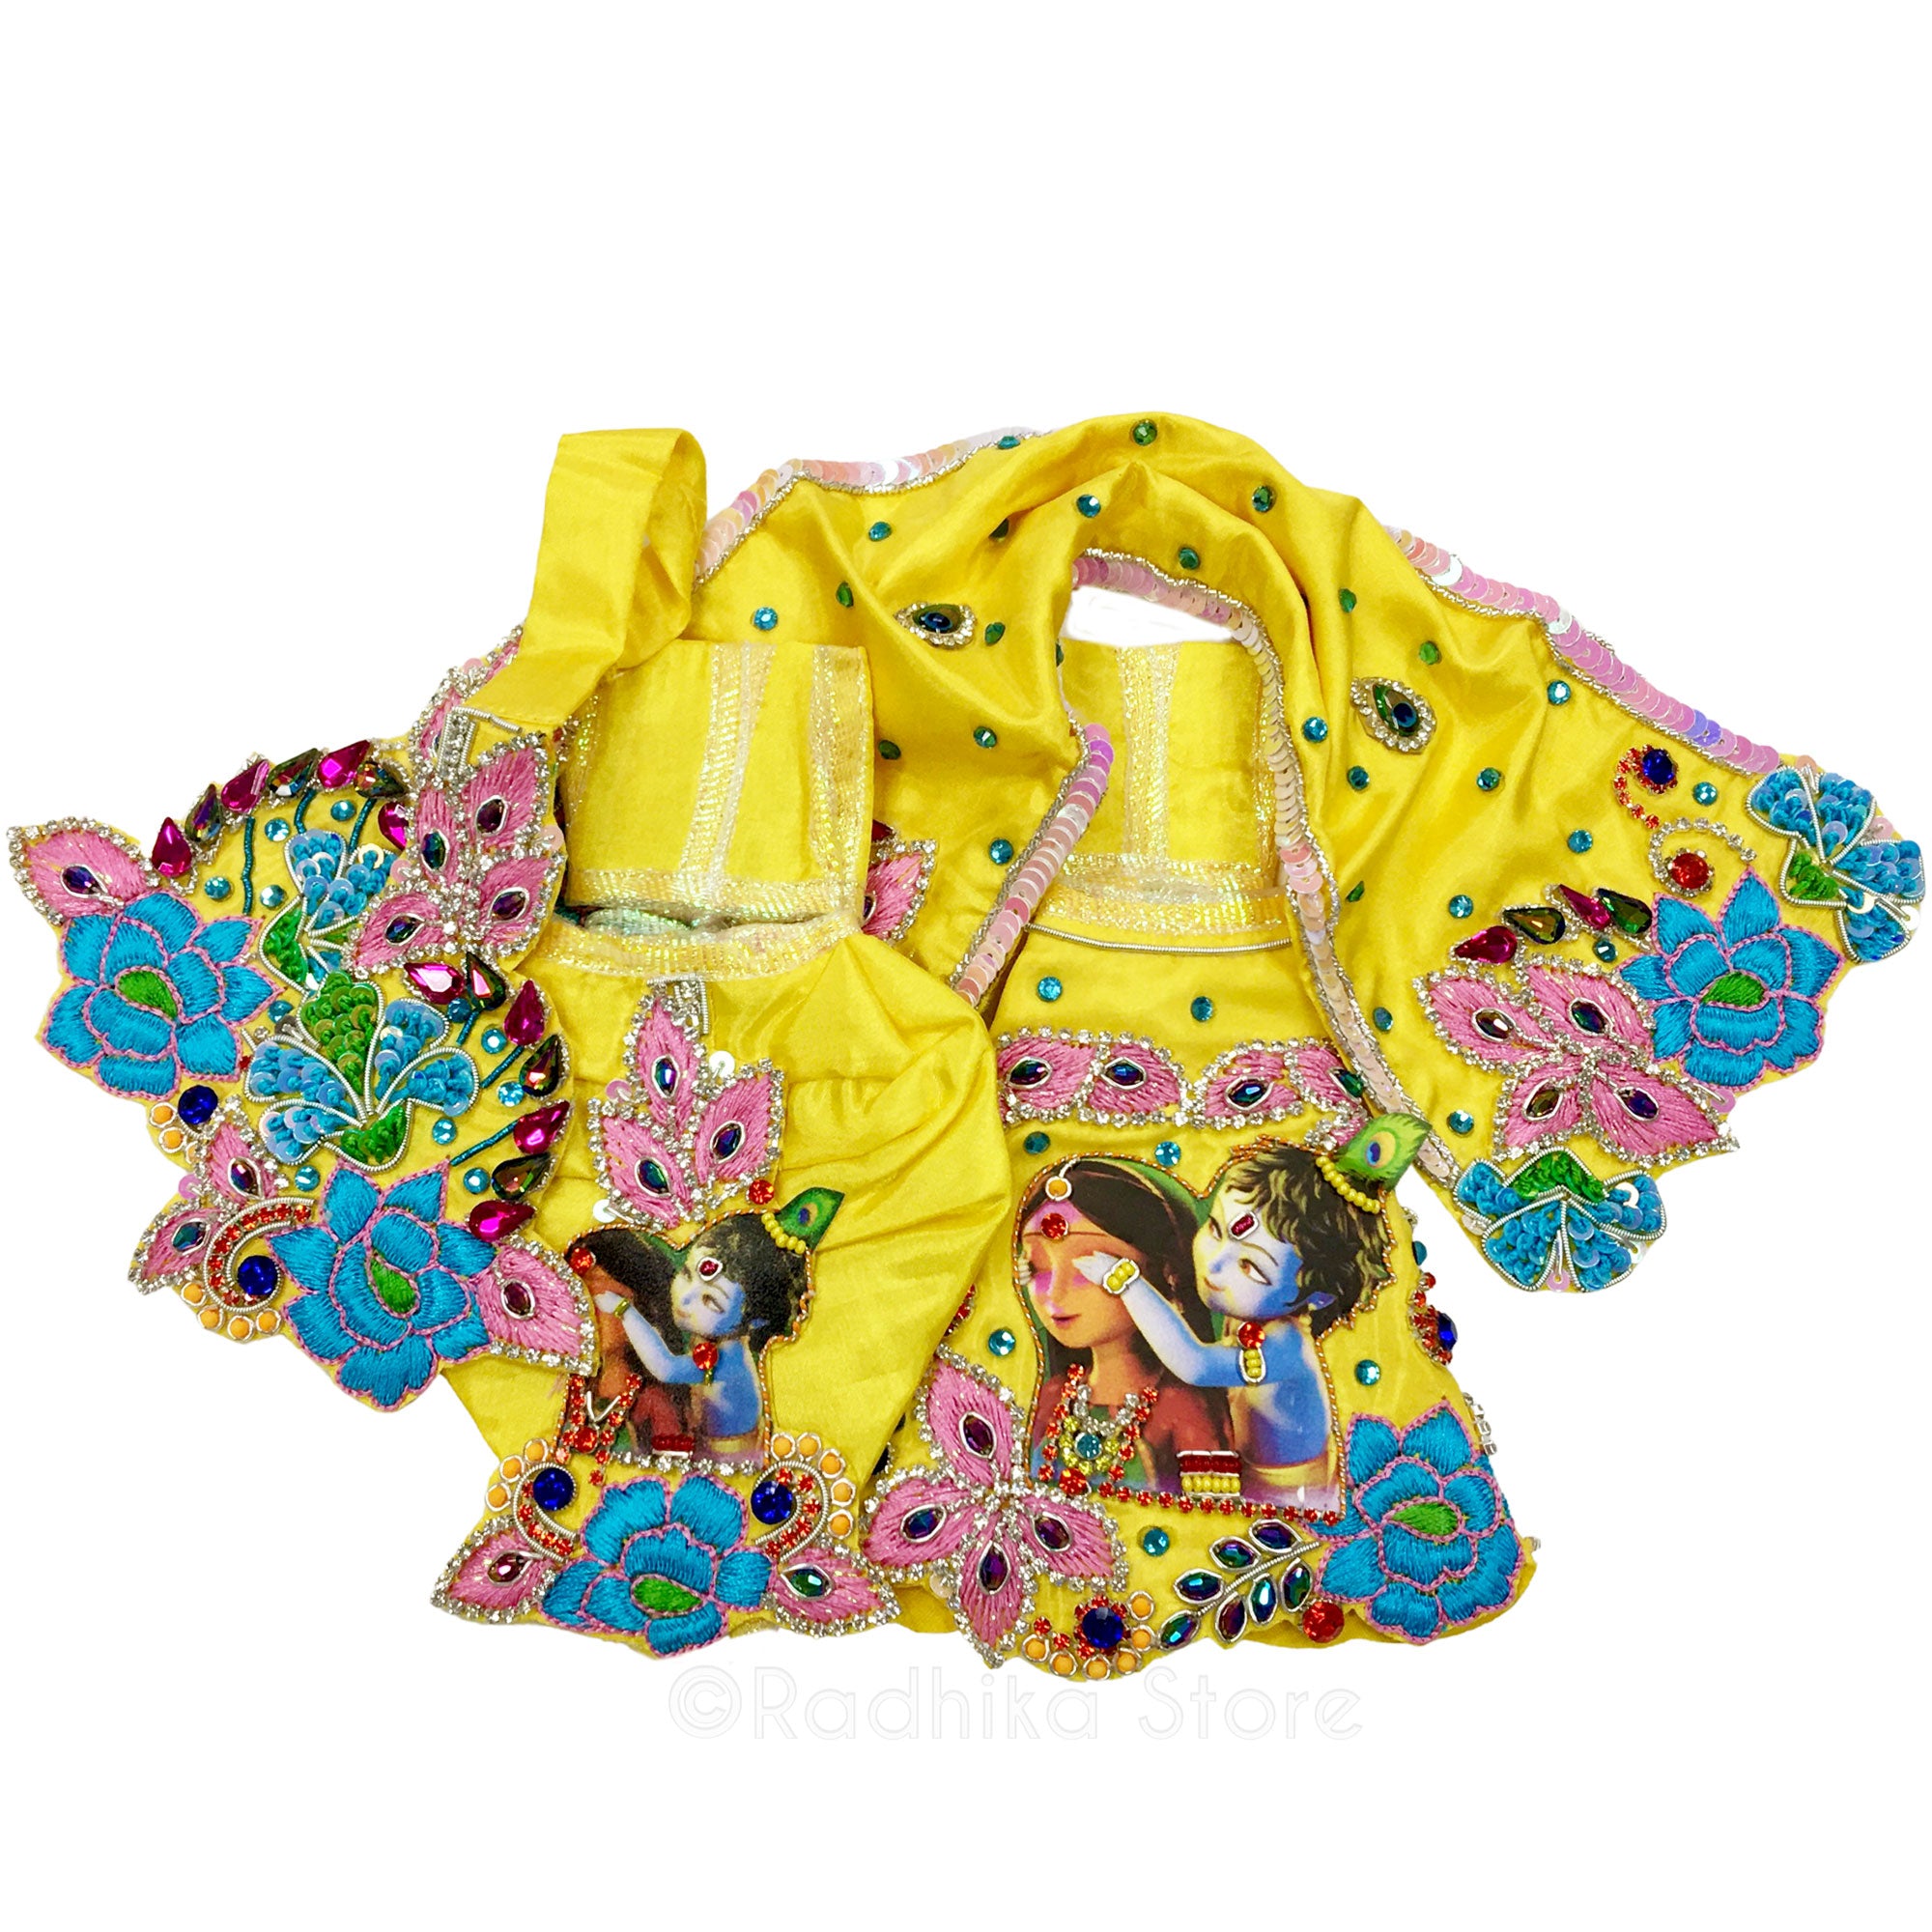 Damodara Lila - Yellow Pink and Blue - Radha Krishna Deity Outfit